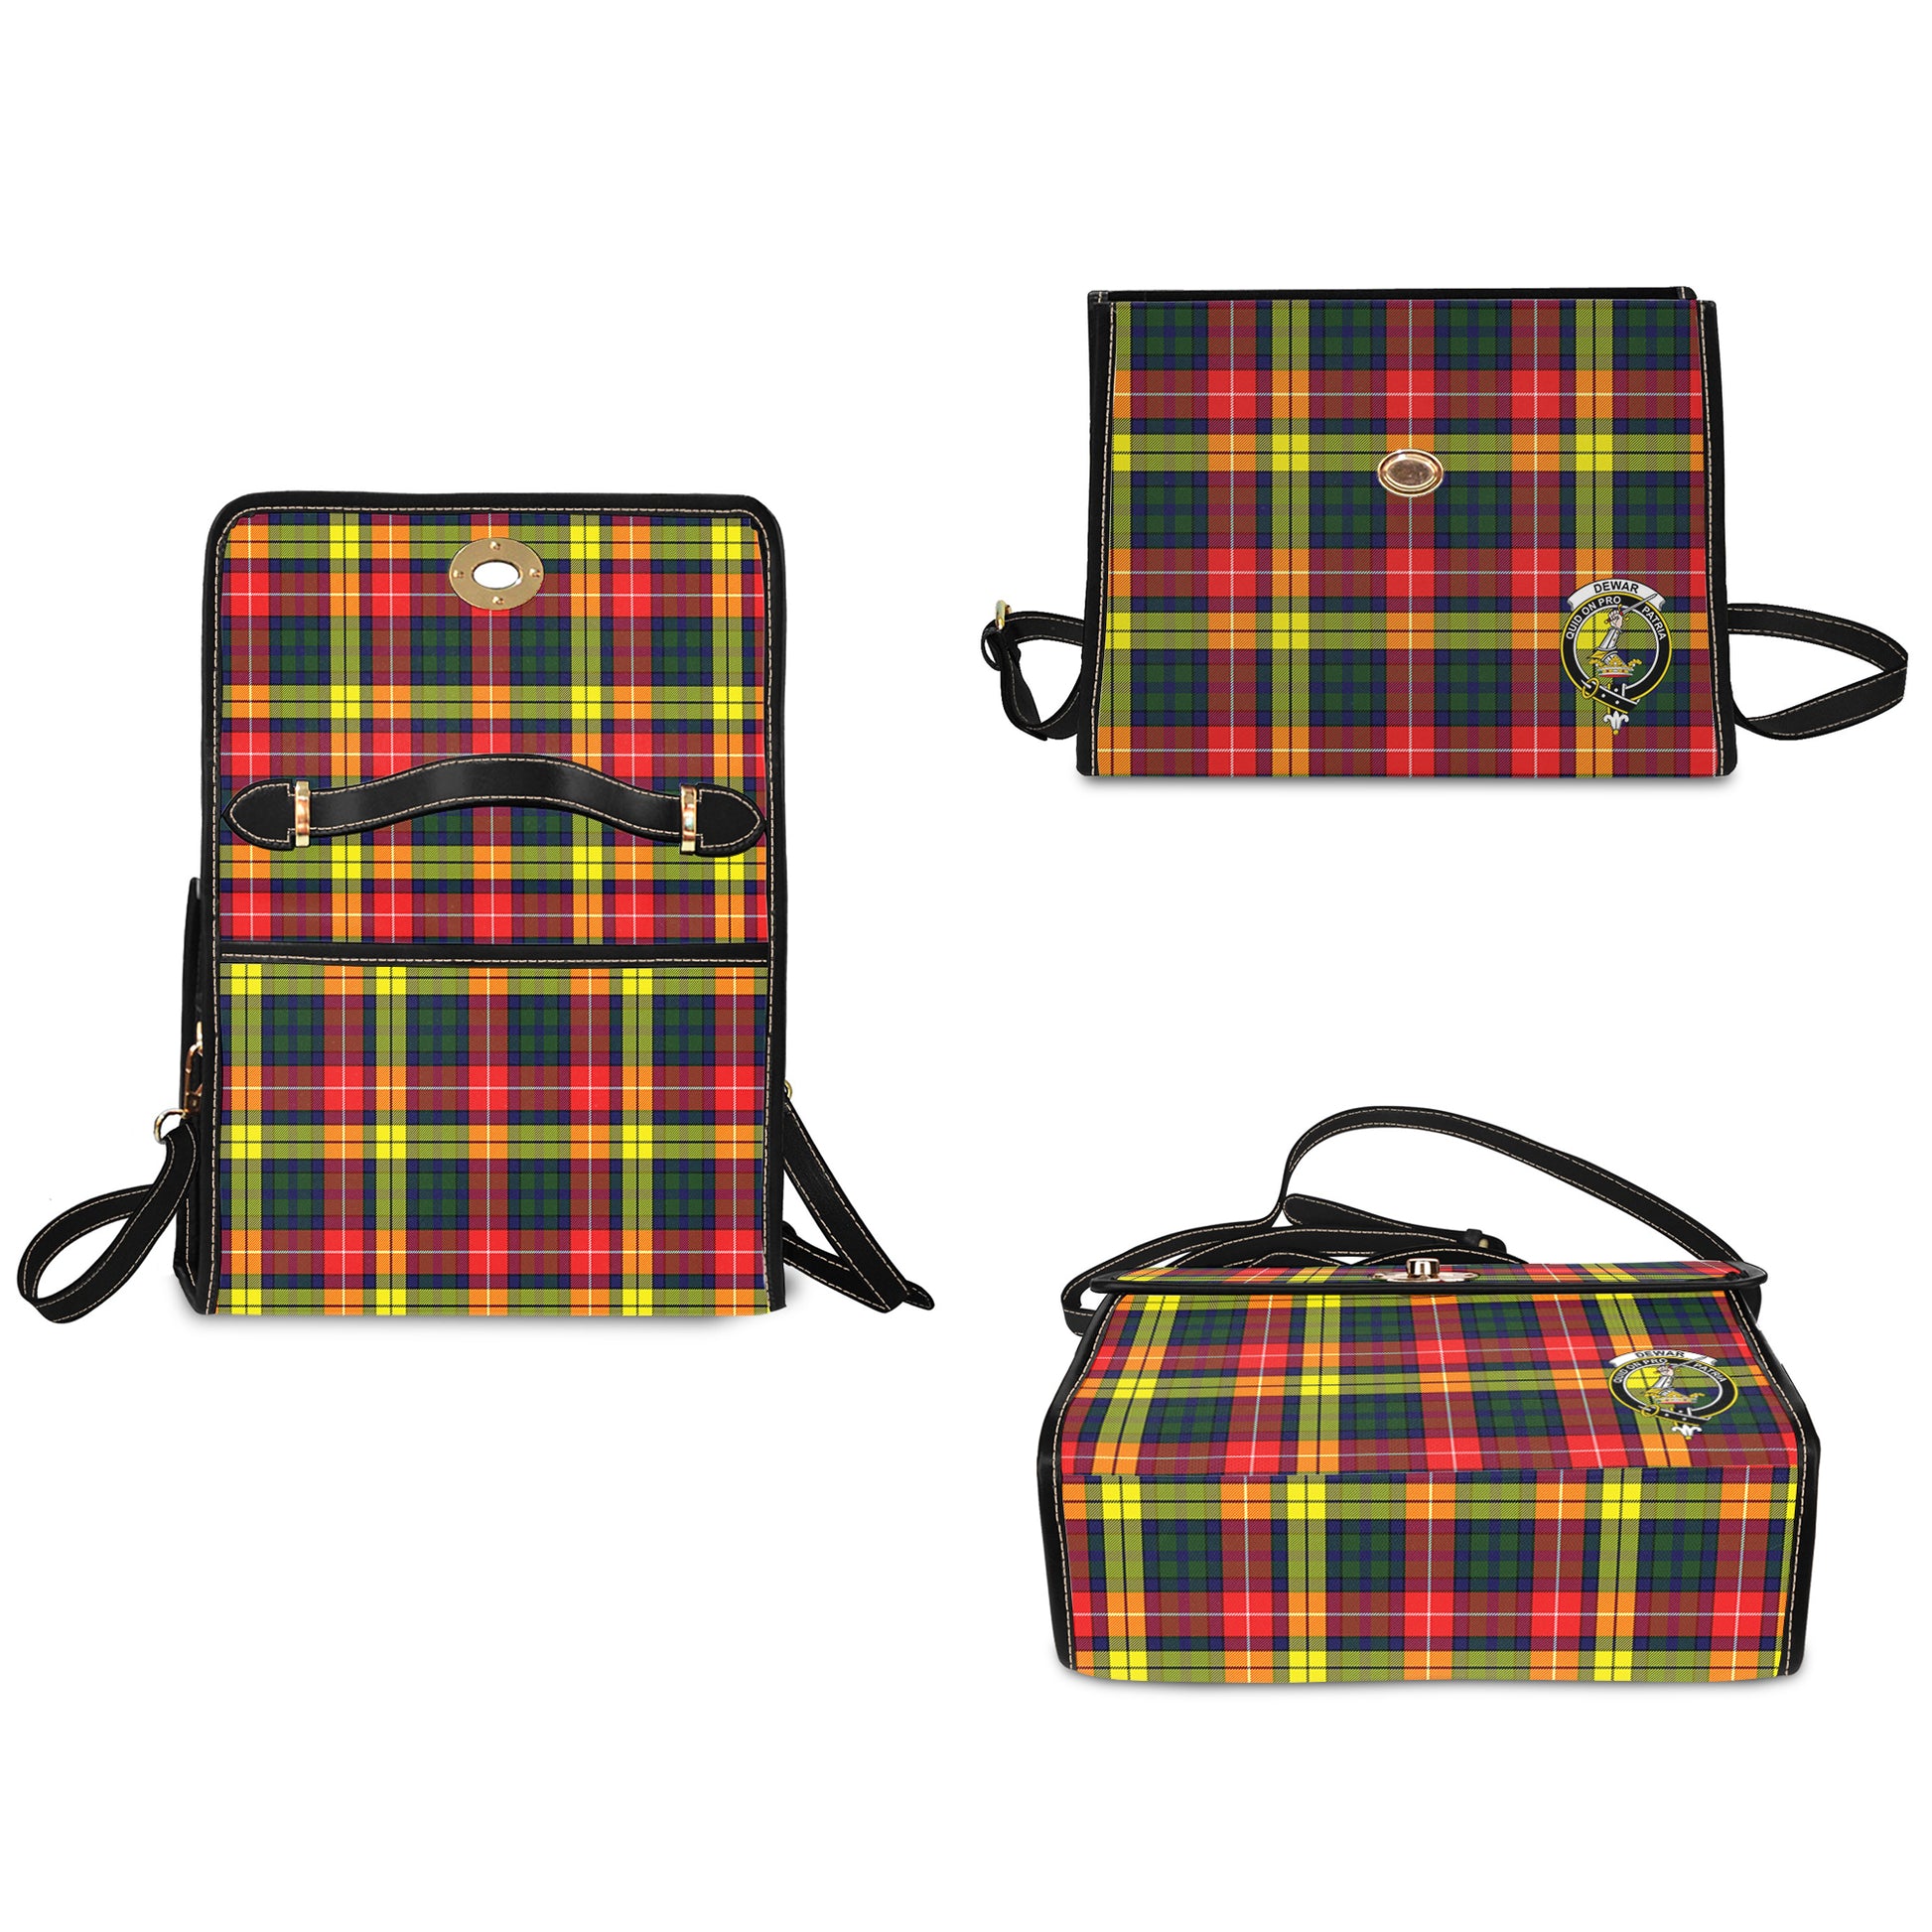 dewar-tartan-leather-strap-waterproof-canvas-bag-with-family-crest